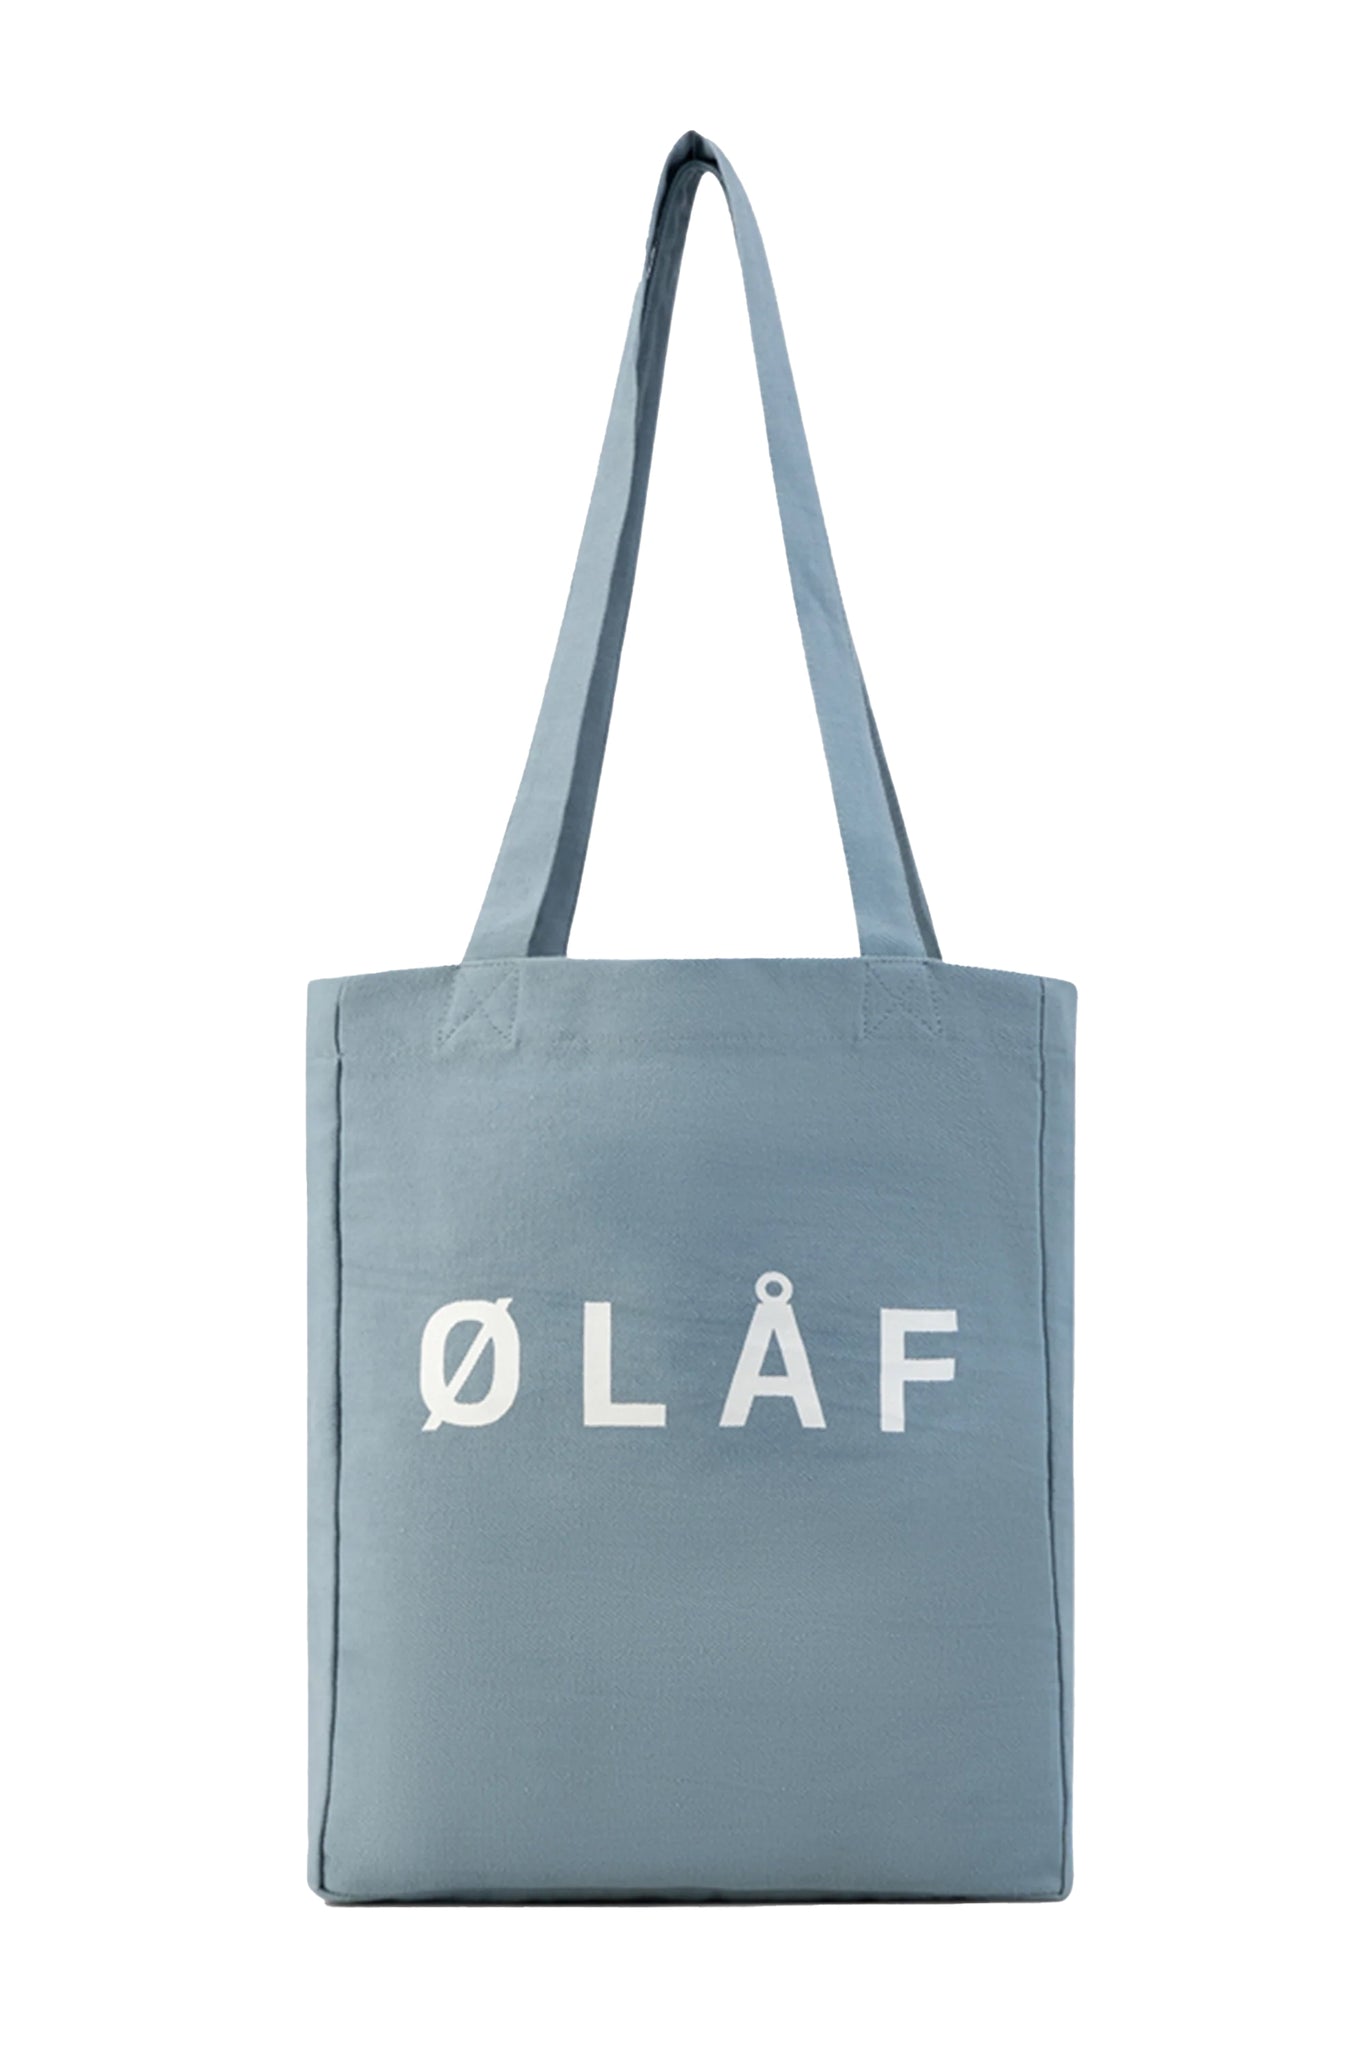 Olaf Tote Bag, baby blue